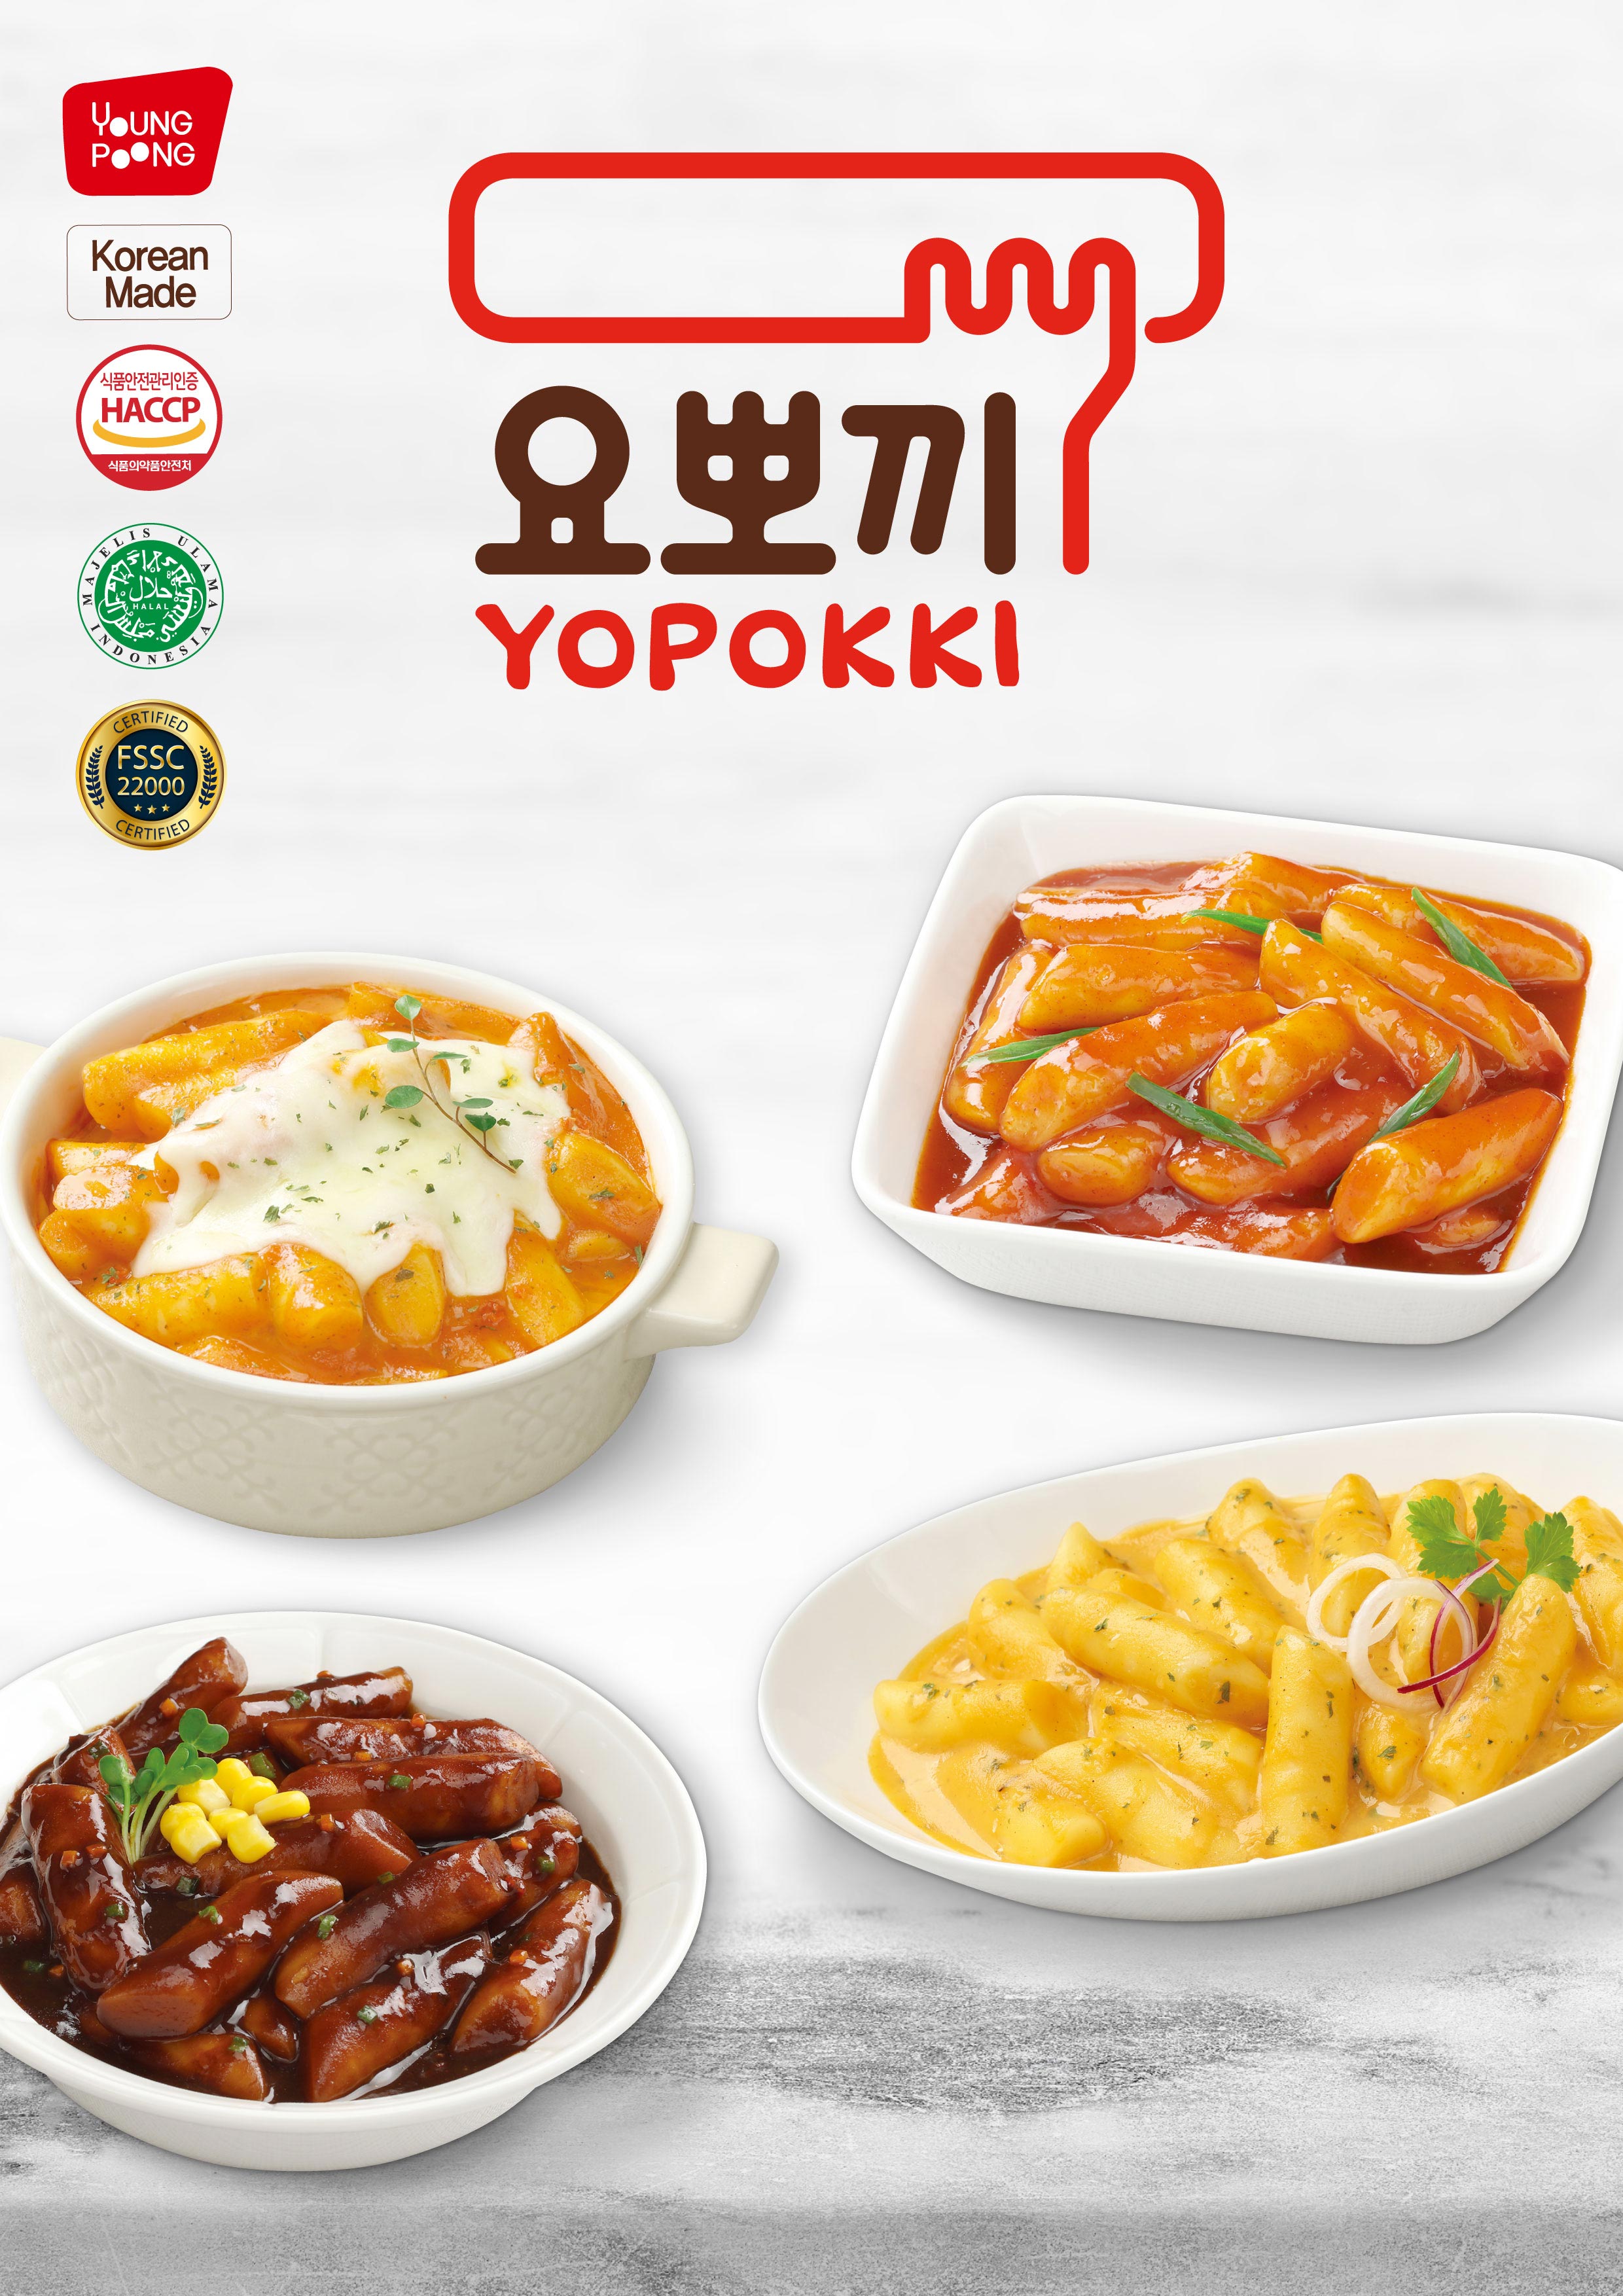 yopokki catalog page 1-2